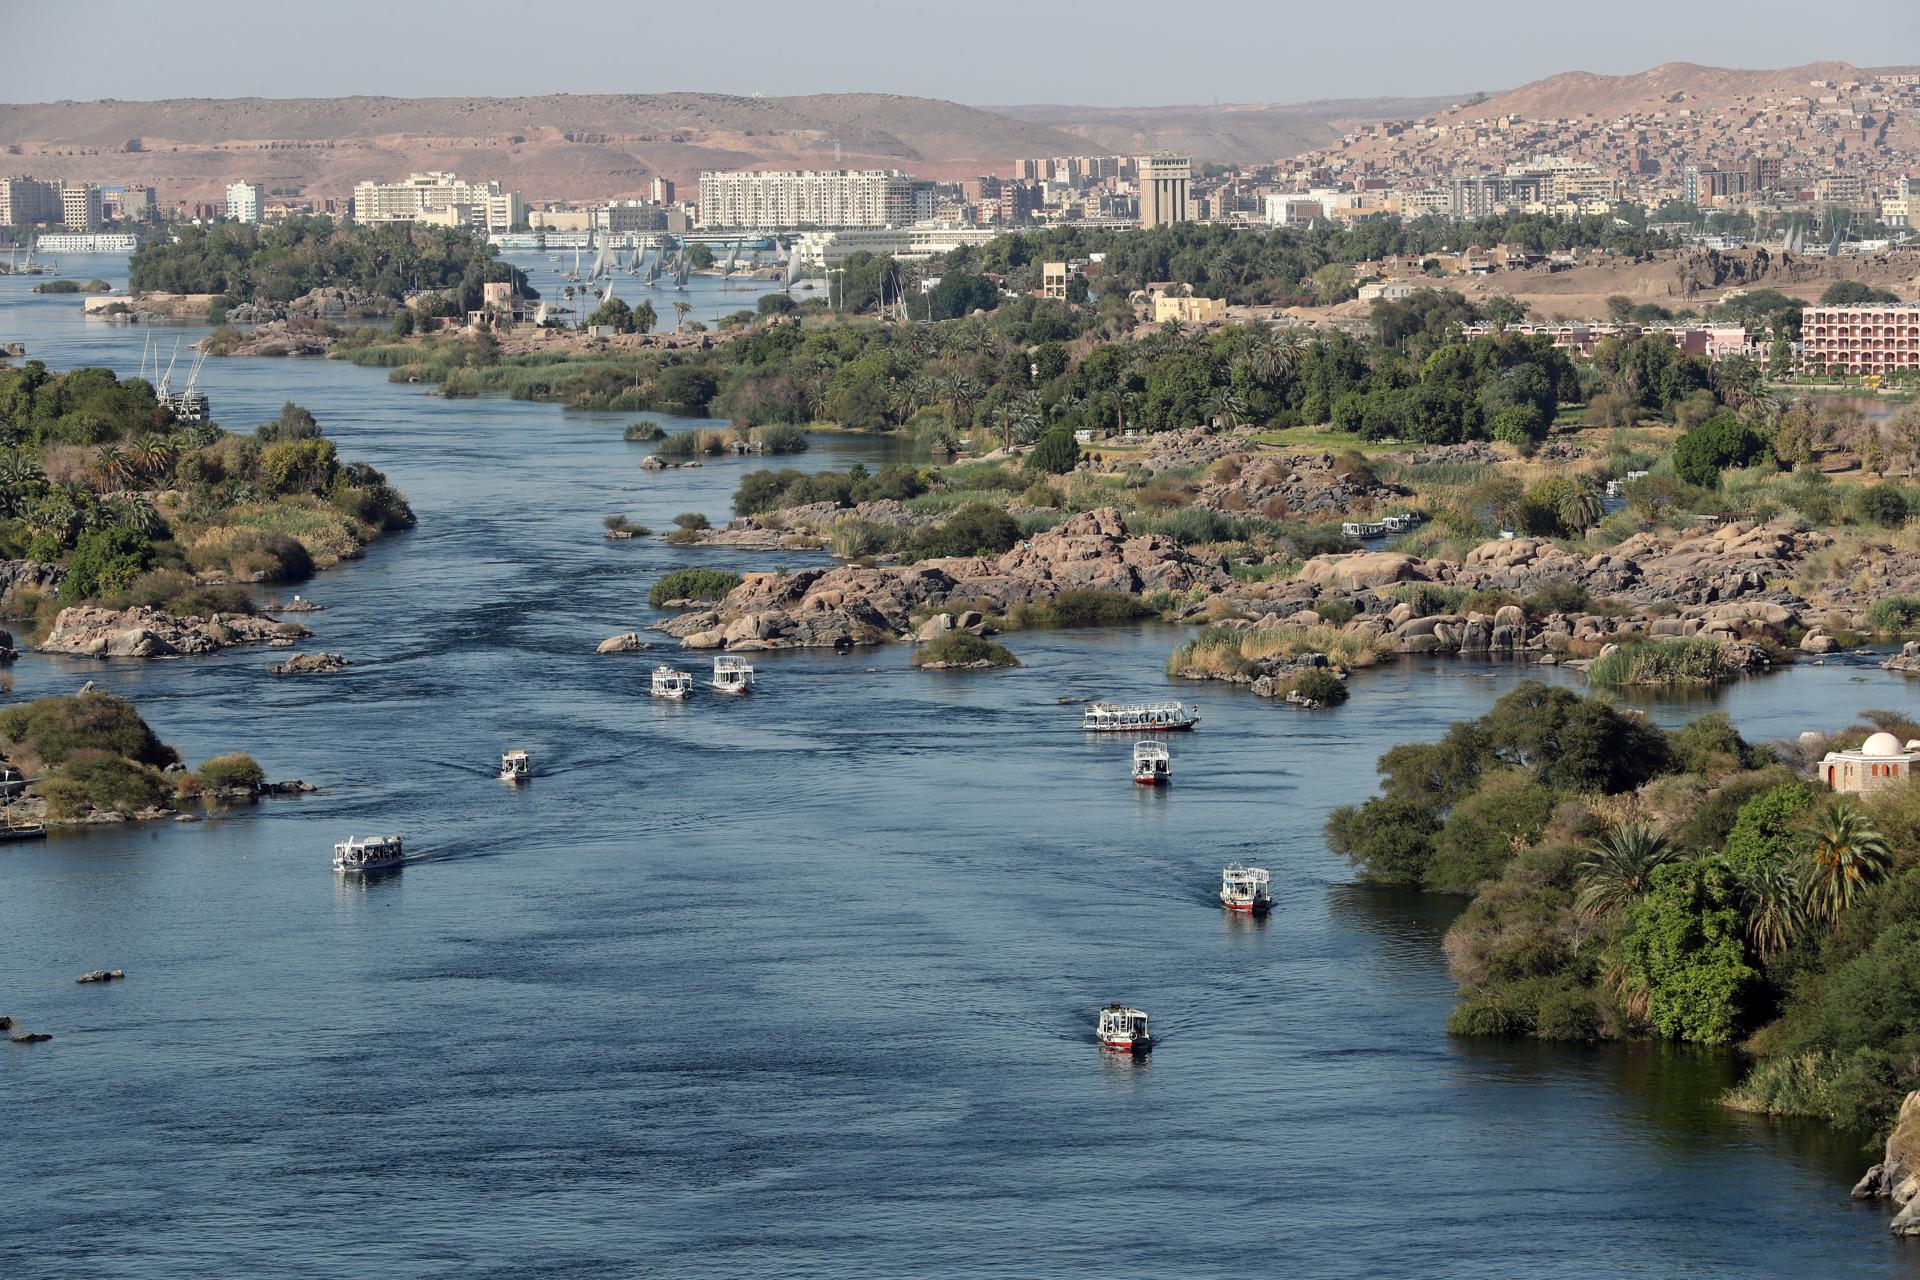 Barcos en el rio Nilo. EFE/EPA/KHALED ELFIQI
I